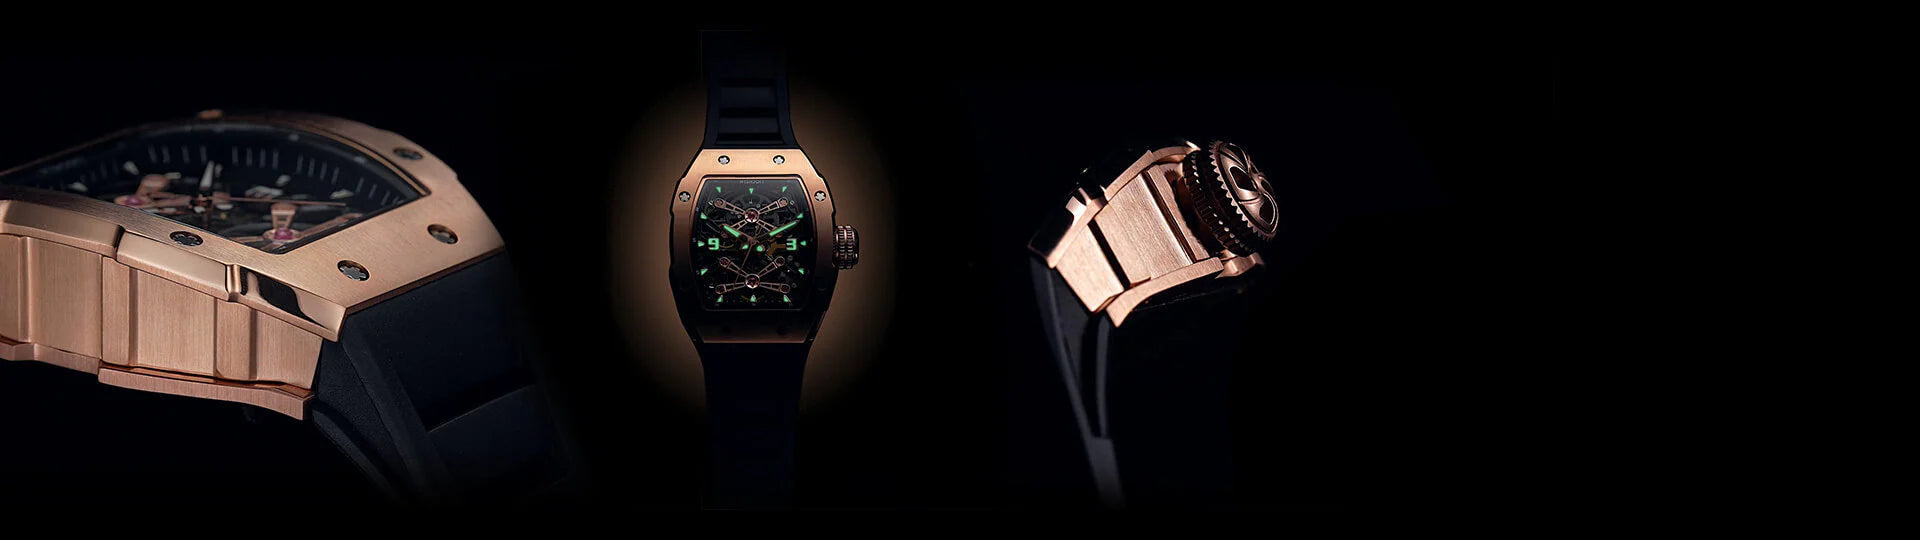 Gold Watches For Men-Wishdoit Mechanical Watches